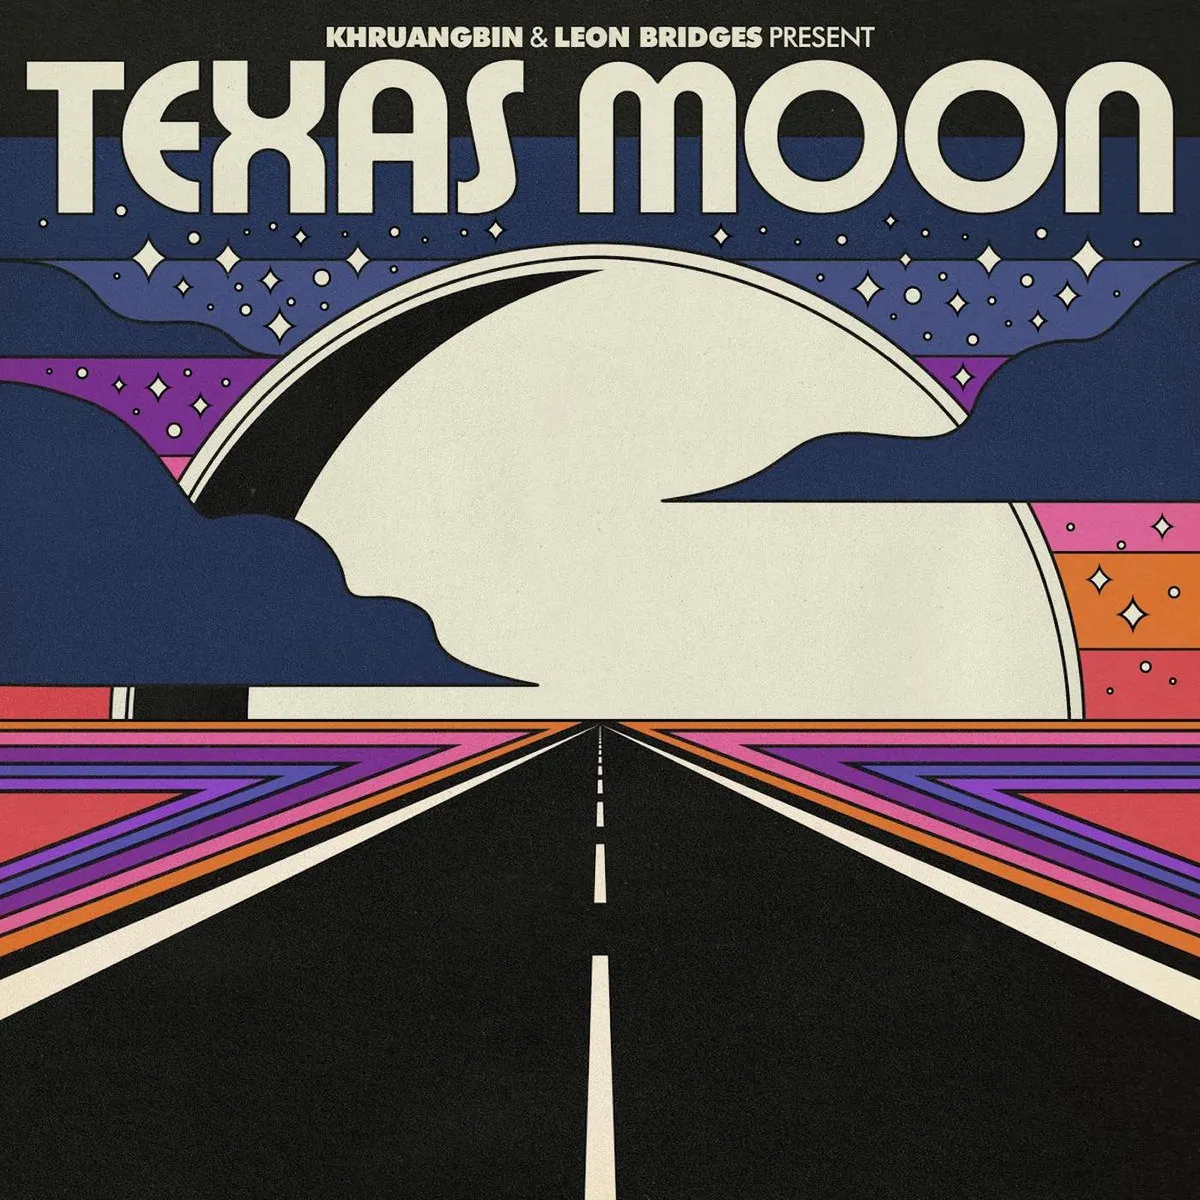 Khruangbin & Leon Bridges - Texas Moon (Black vinyl) : EP+DOWNLOAD CODE